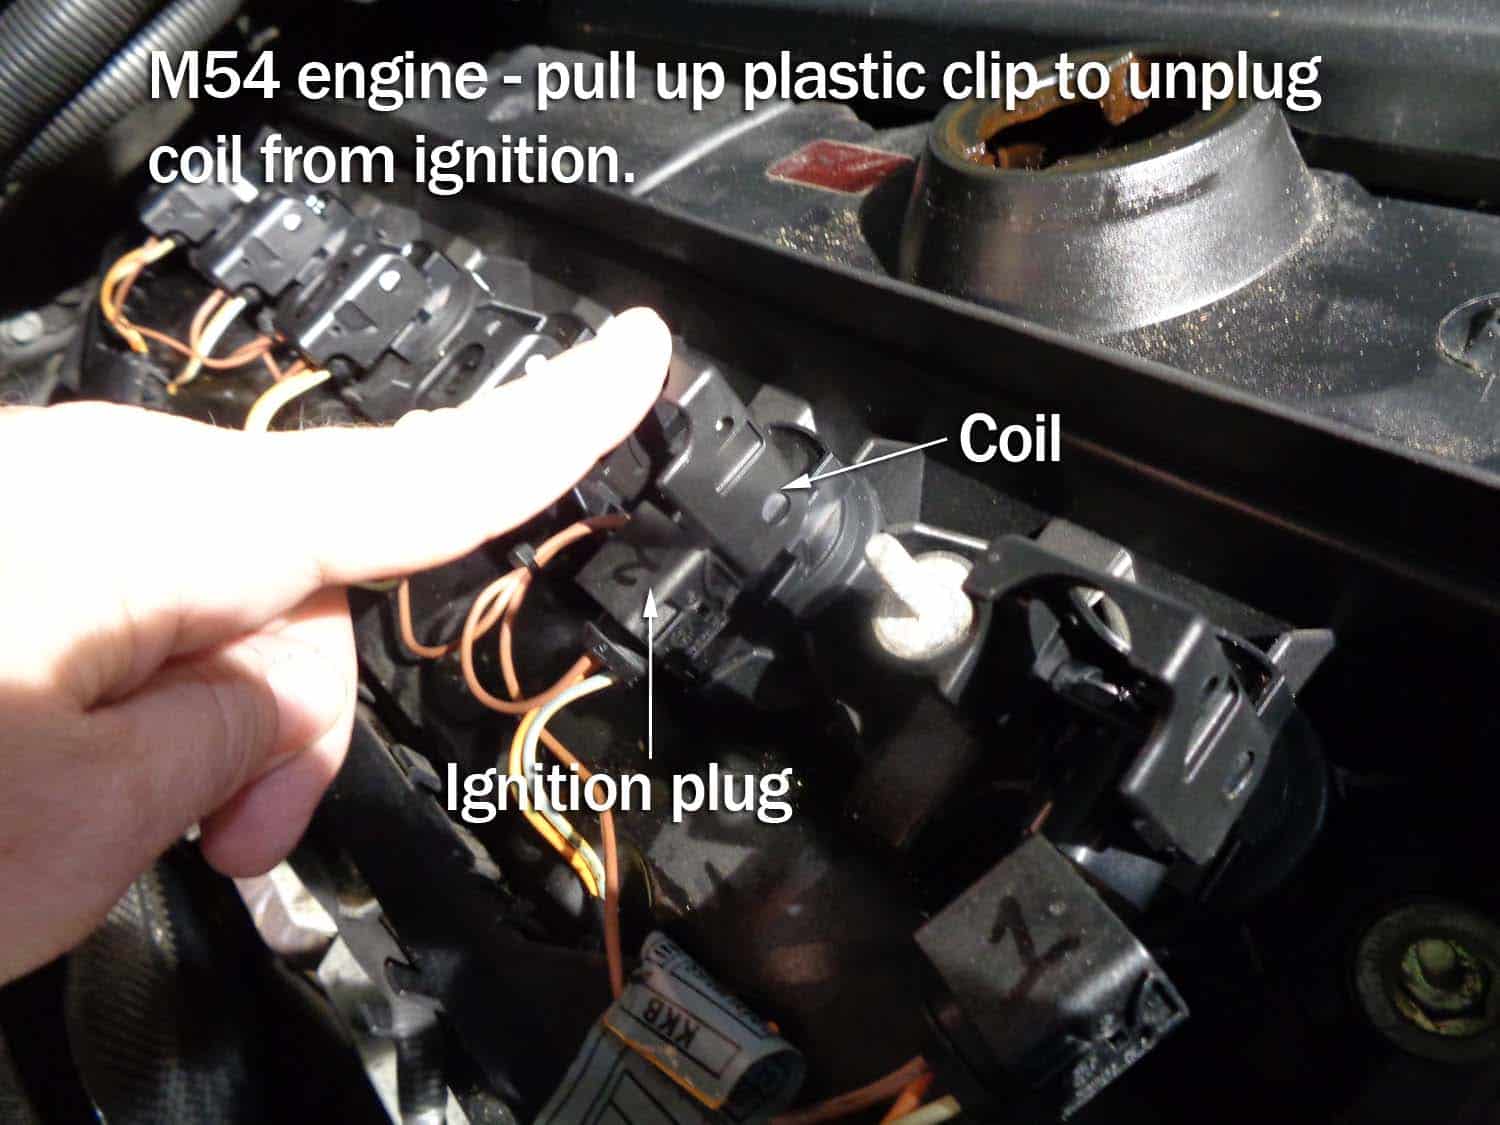 bmw e46 tune up - unplug the ignition coils